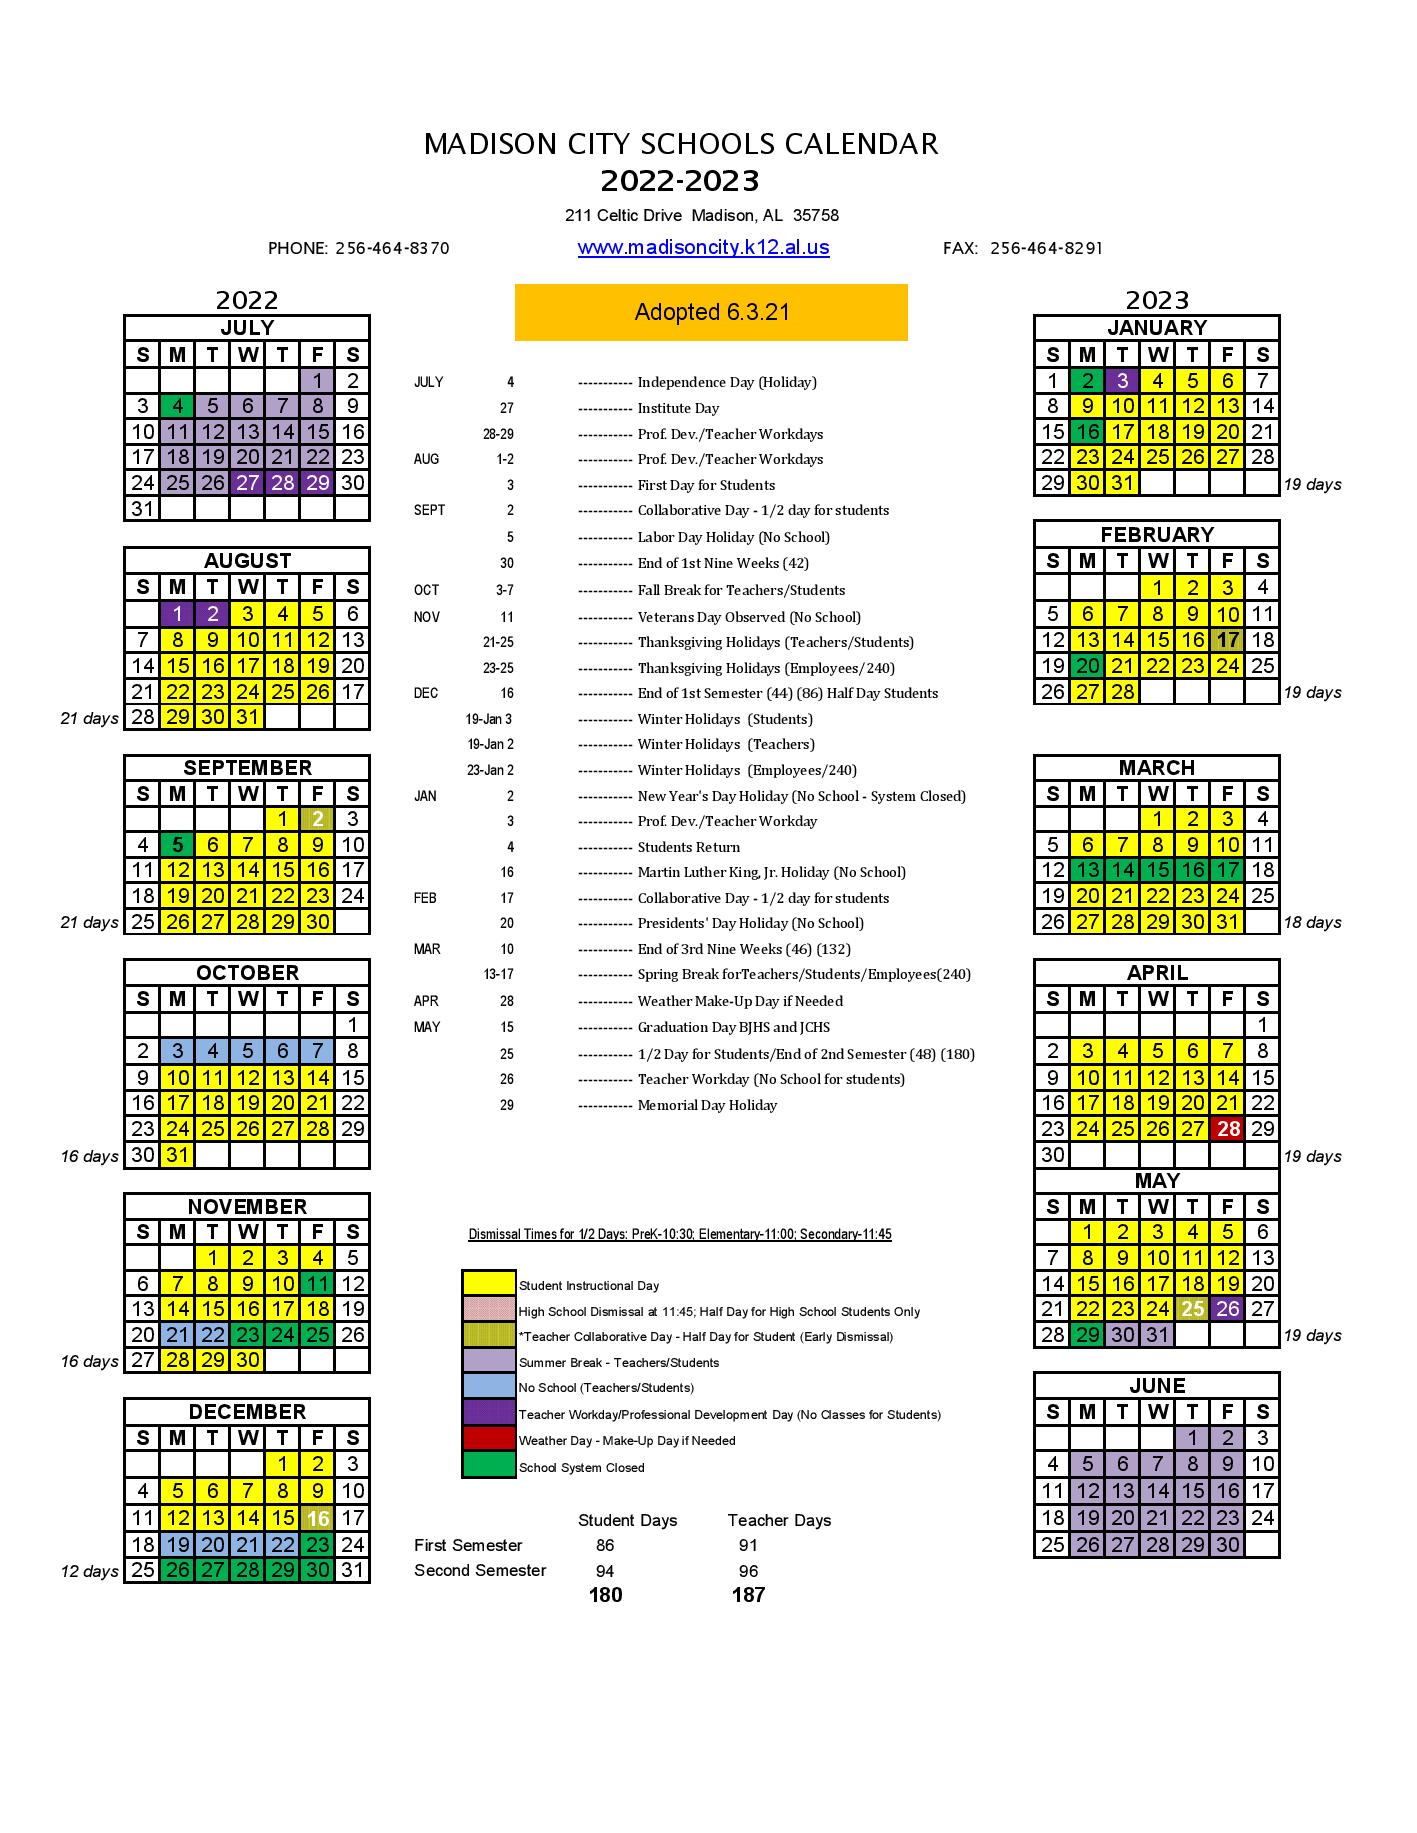 Madison City Schools Calendar 2022-2023 in PDF